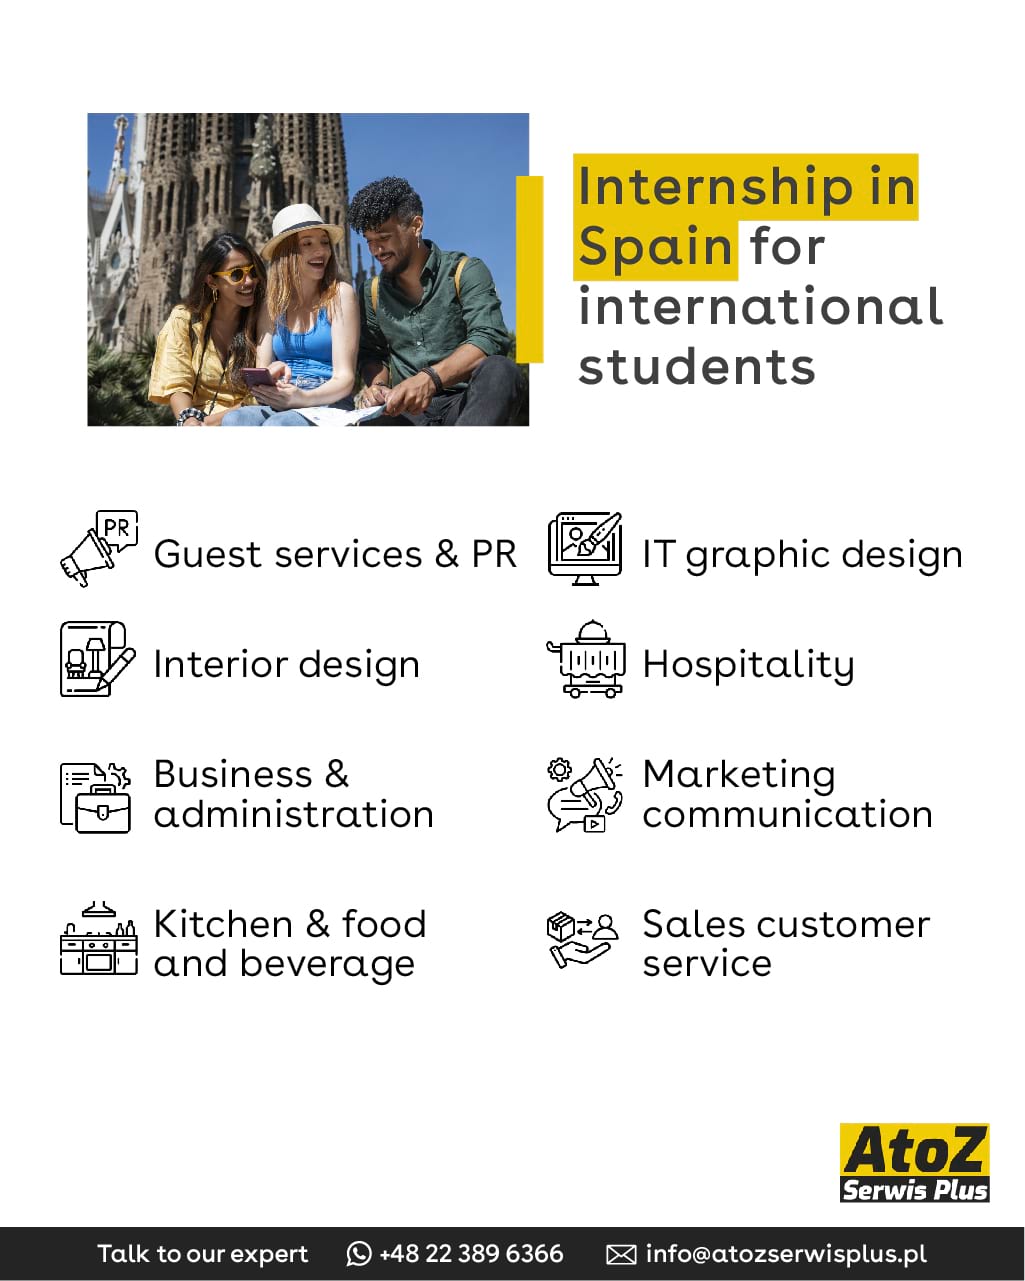 internship-in-spain-for-international-students.jpg